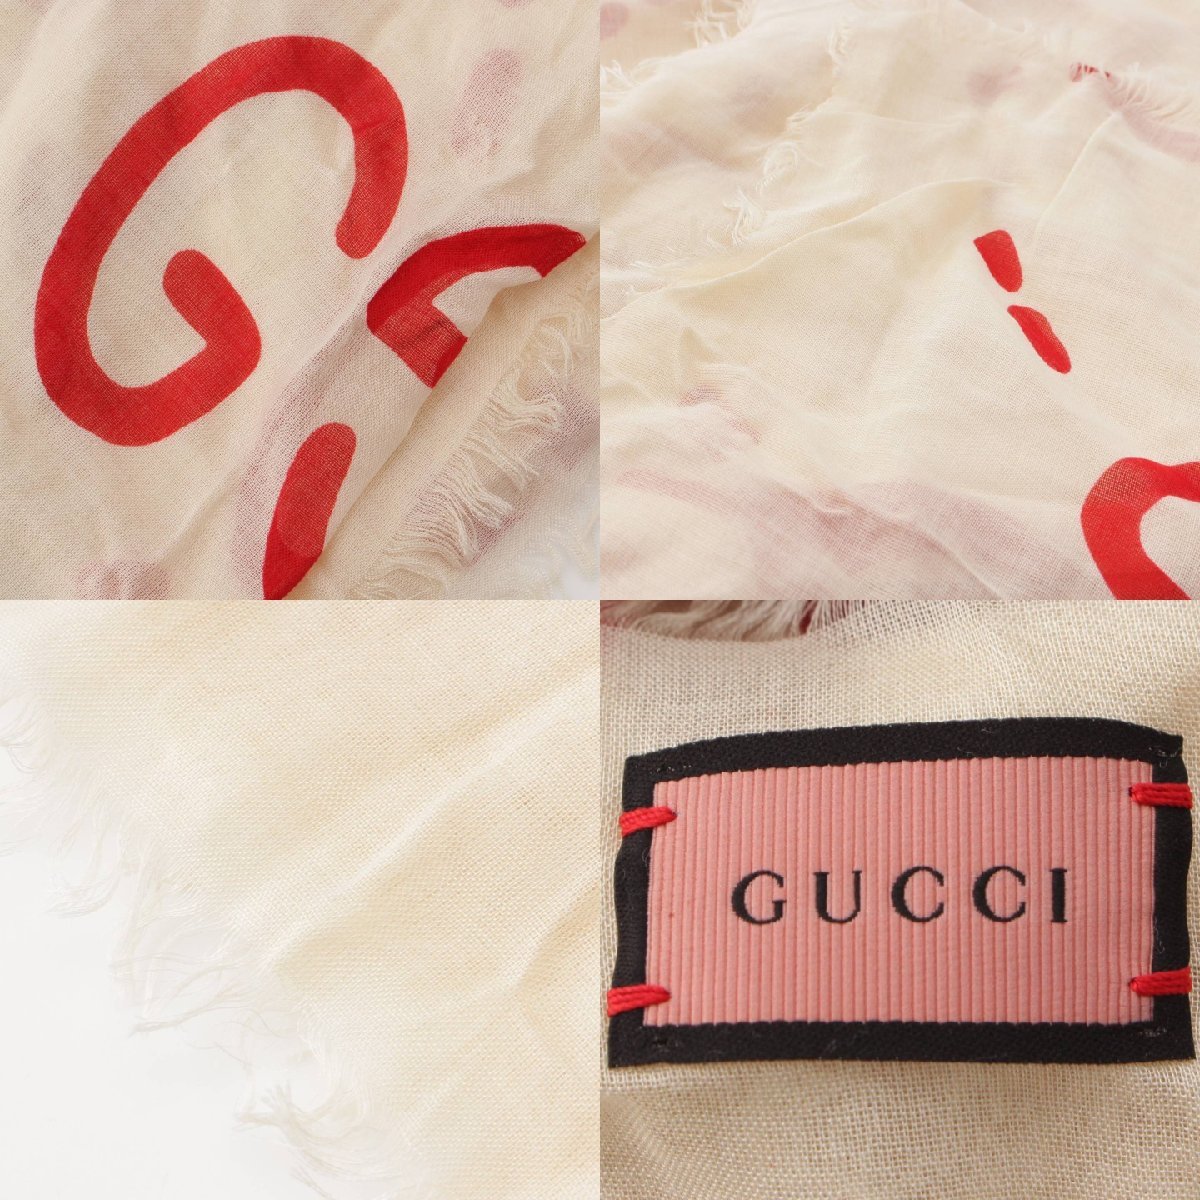 [ Gucci ]Gucci GG призрак шелк большой размер бахрома палантин шаль 449009 бежевый [ б/у ][ стандартный товар гарантия ]201598